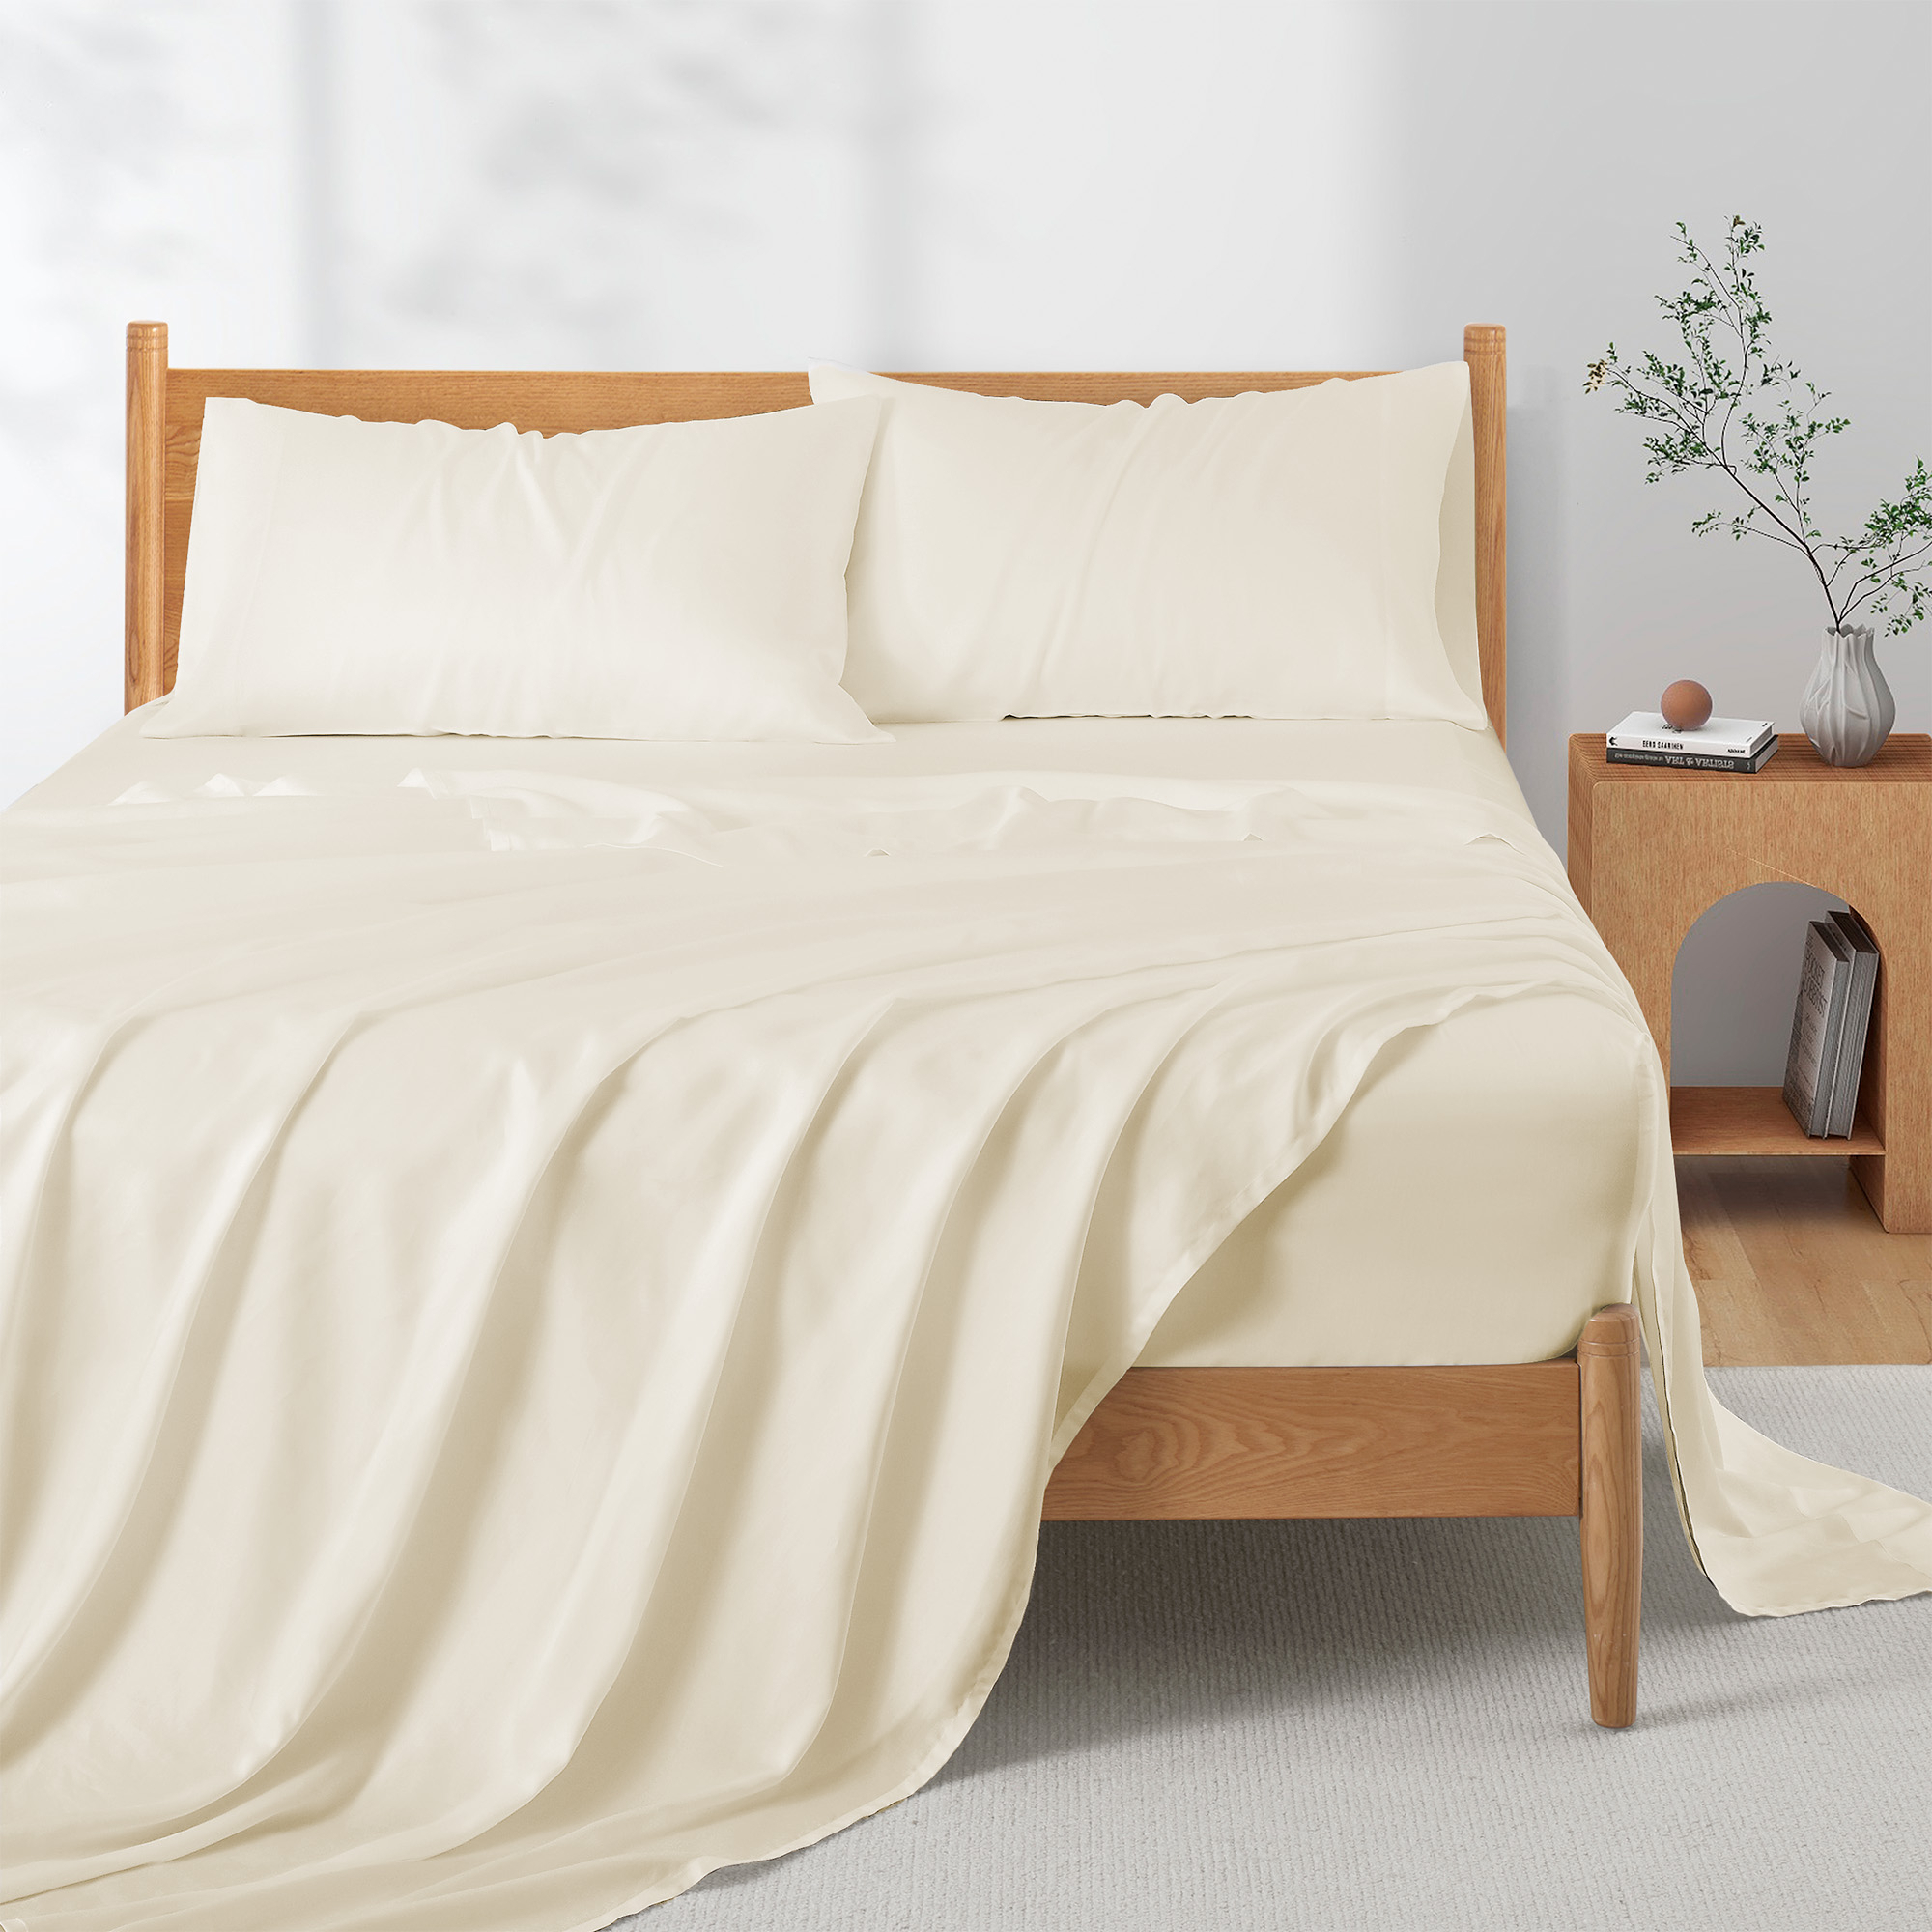 Silky Soft TENCELâ¢ Lyocell Cooling Sheet Set-Breathability And Moisture-wicking Bedding Set - Cannoli Cream, Queen